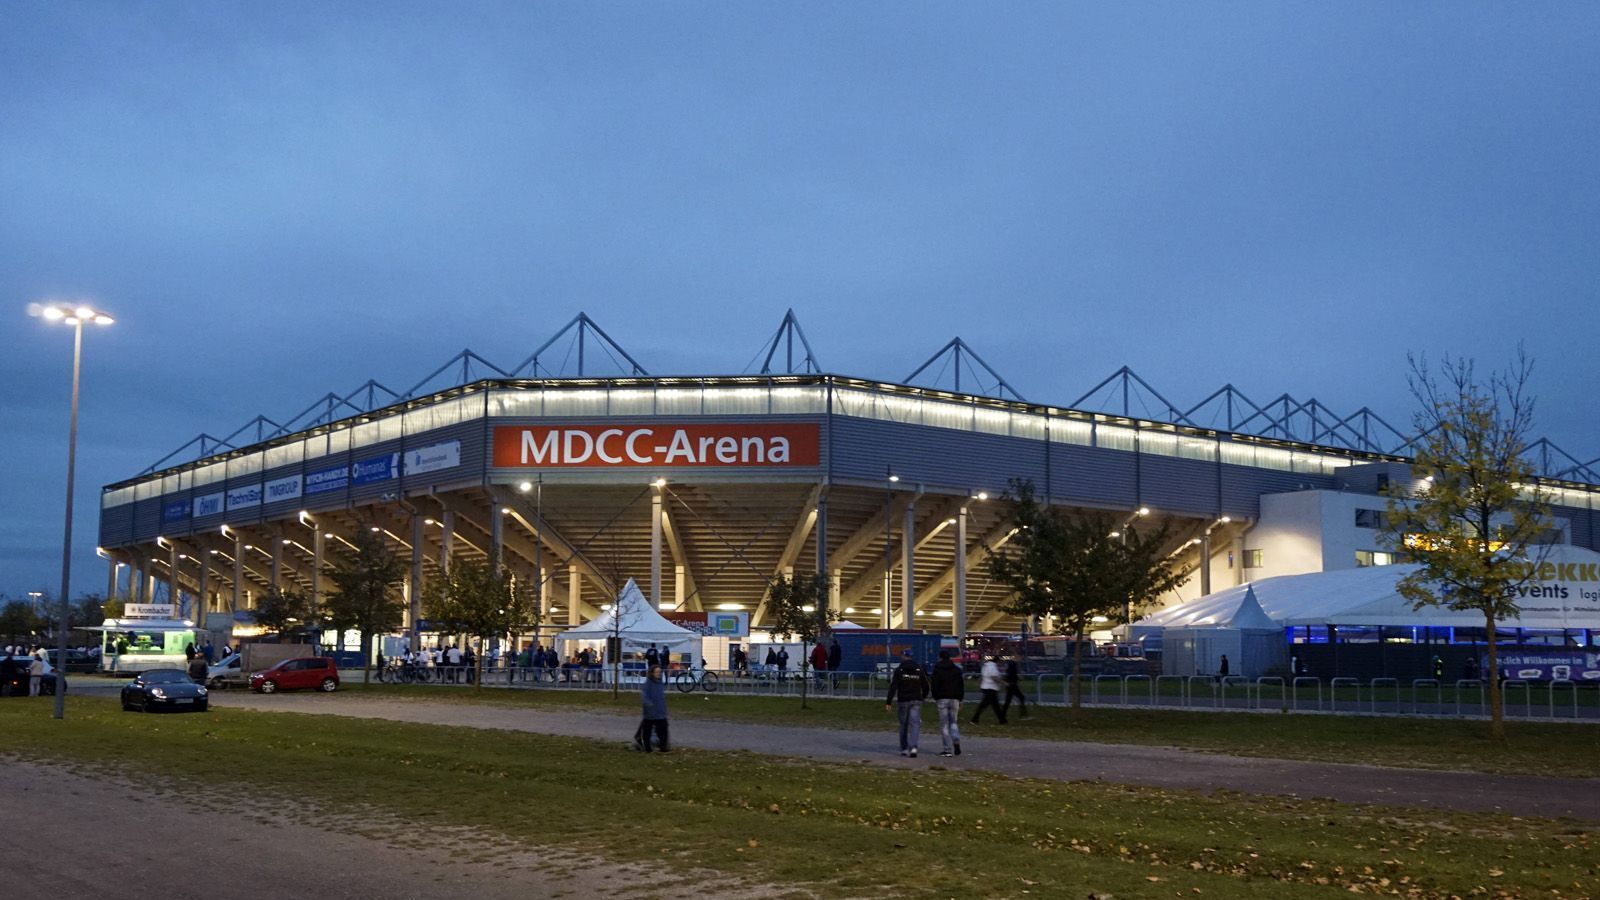 
                <strong>MDCC-Arena (1. FC Magdeburg)</strong><br>
                &#x2022; Kapazität: 27.250<br>&#x2022; Sitzplätze: 22.750<br>&#x2022; Stehplätze: 4.500<br>&#x2022; Logen: 15<br>
              